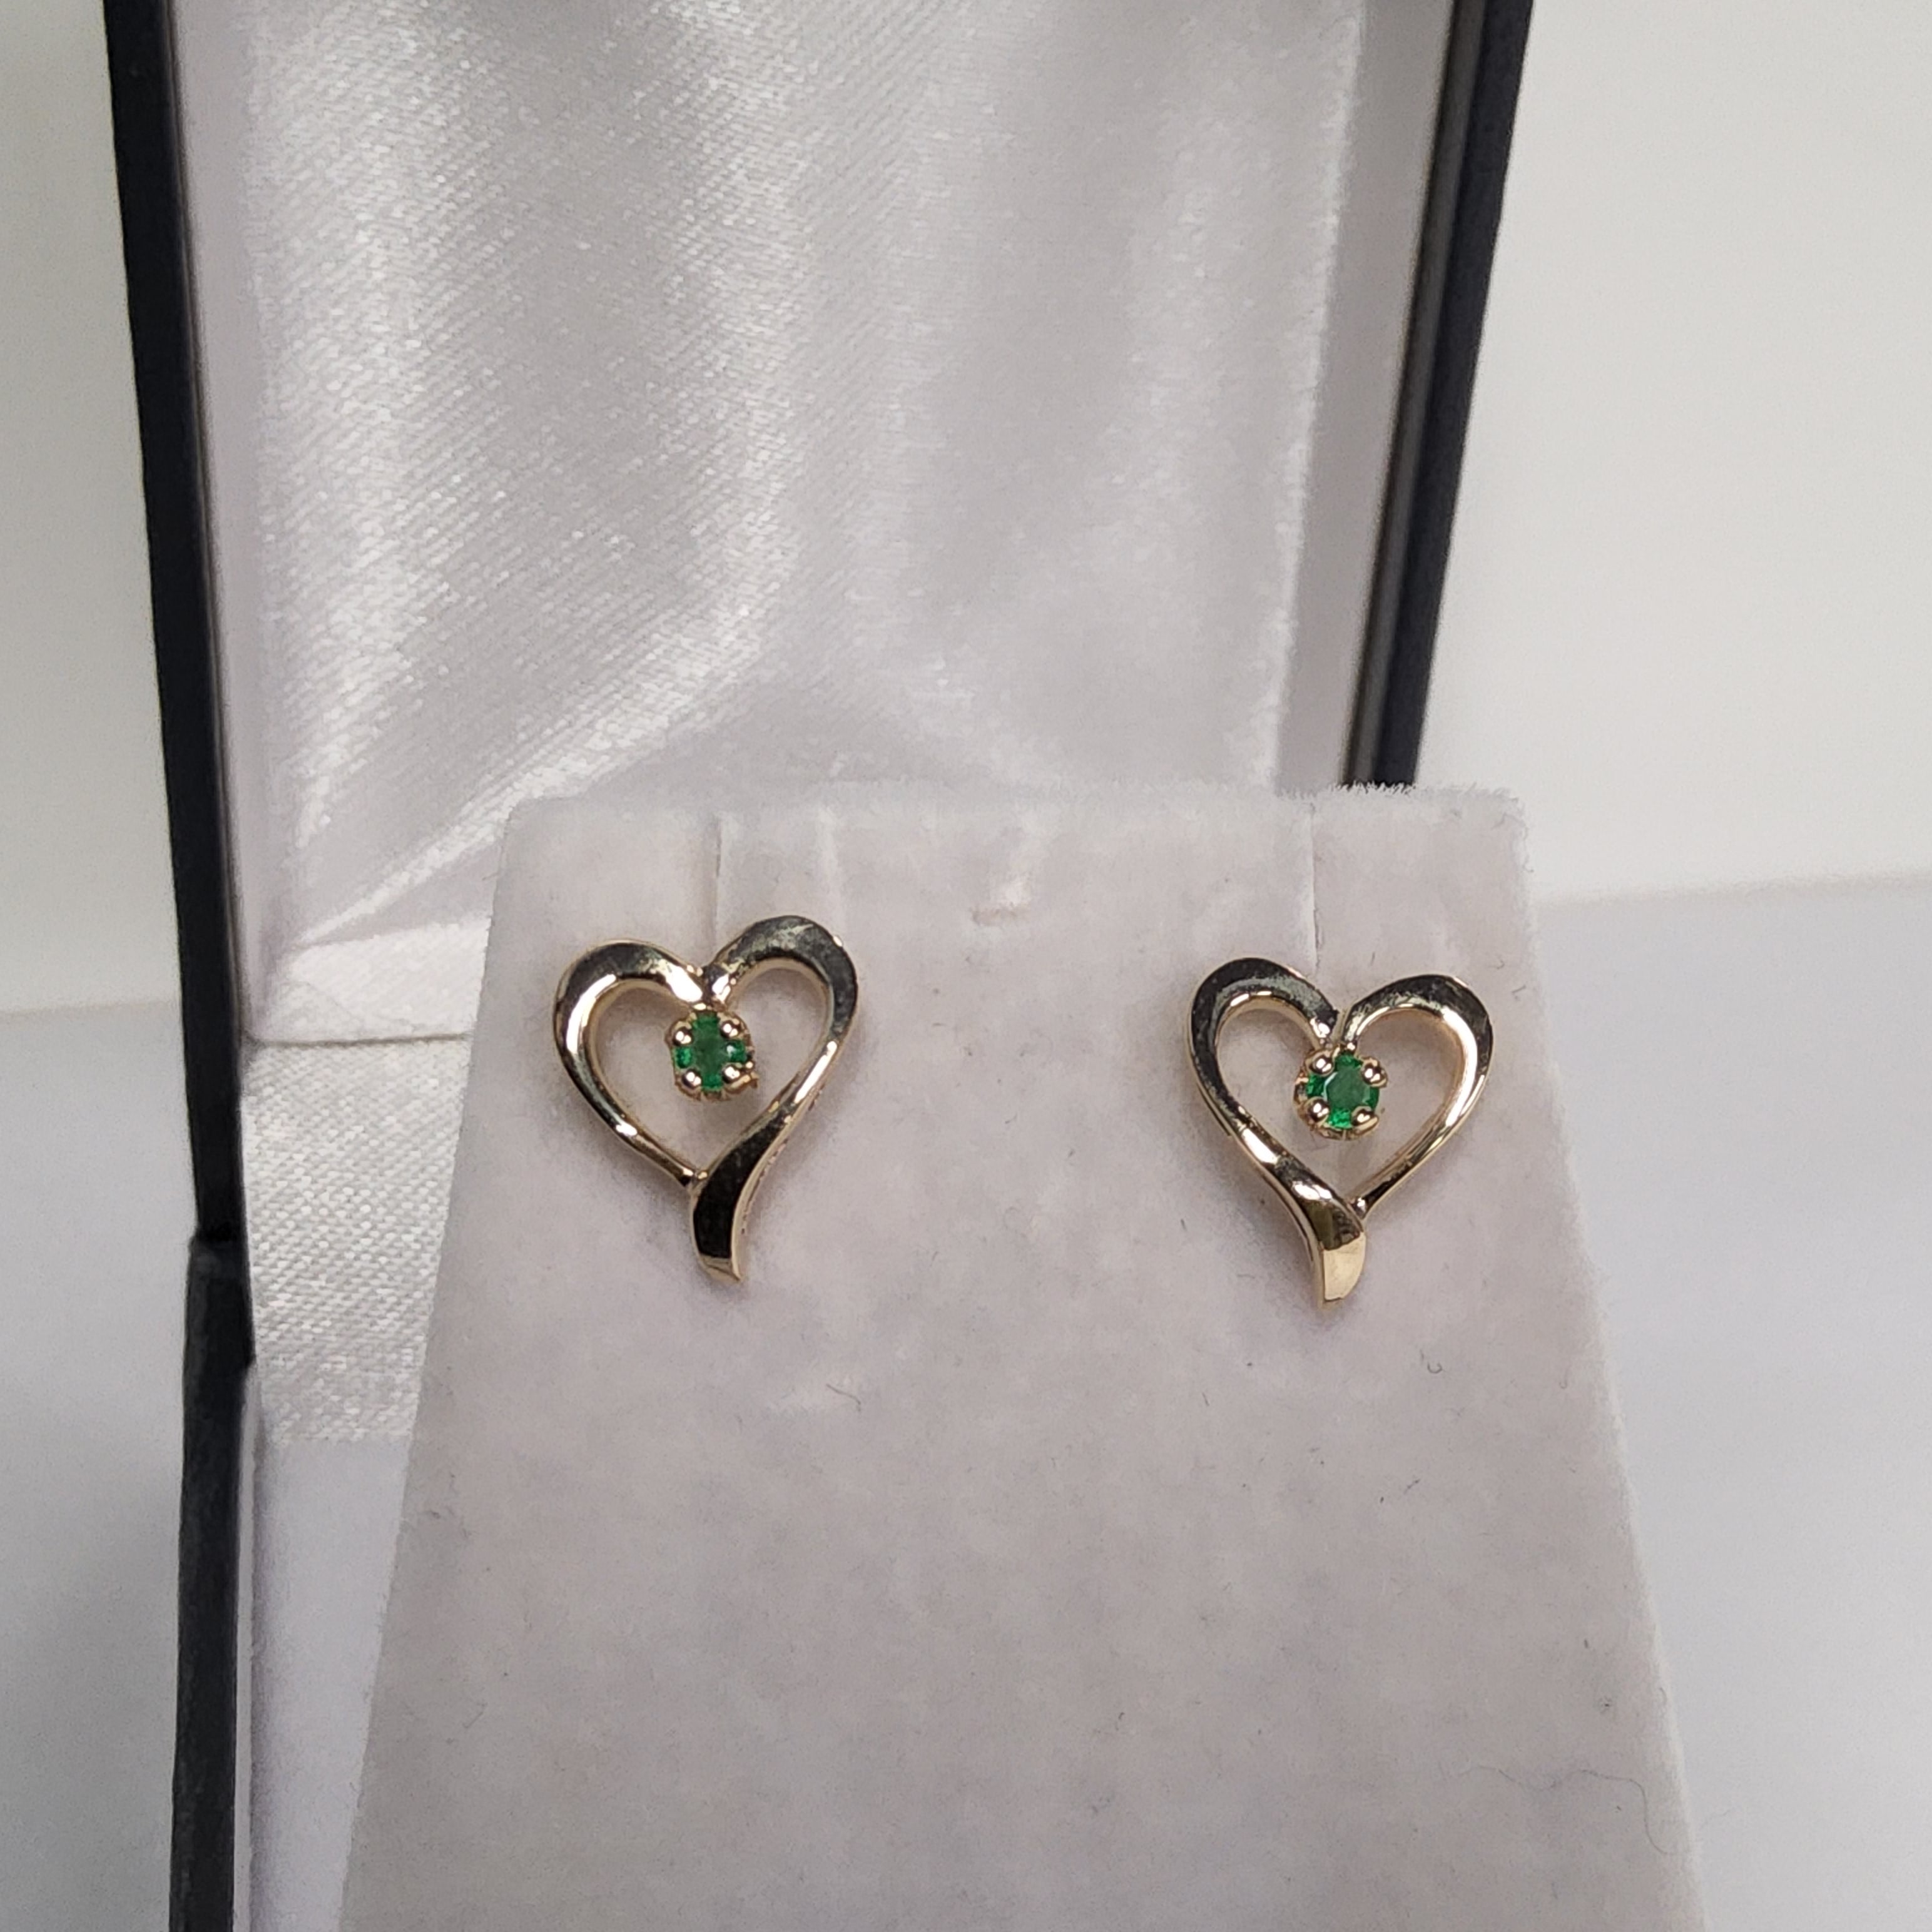 Round Cut Emerald Earrings- Heart E821